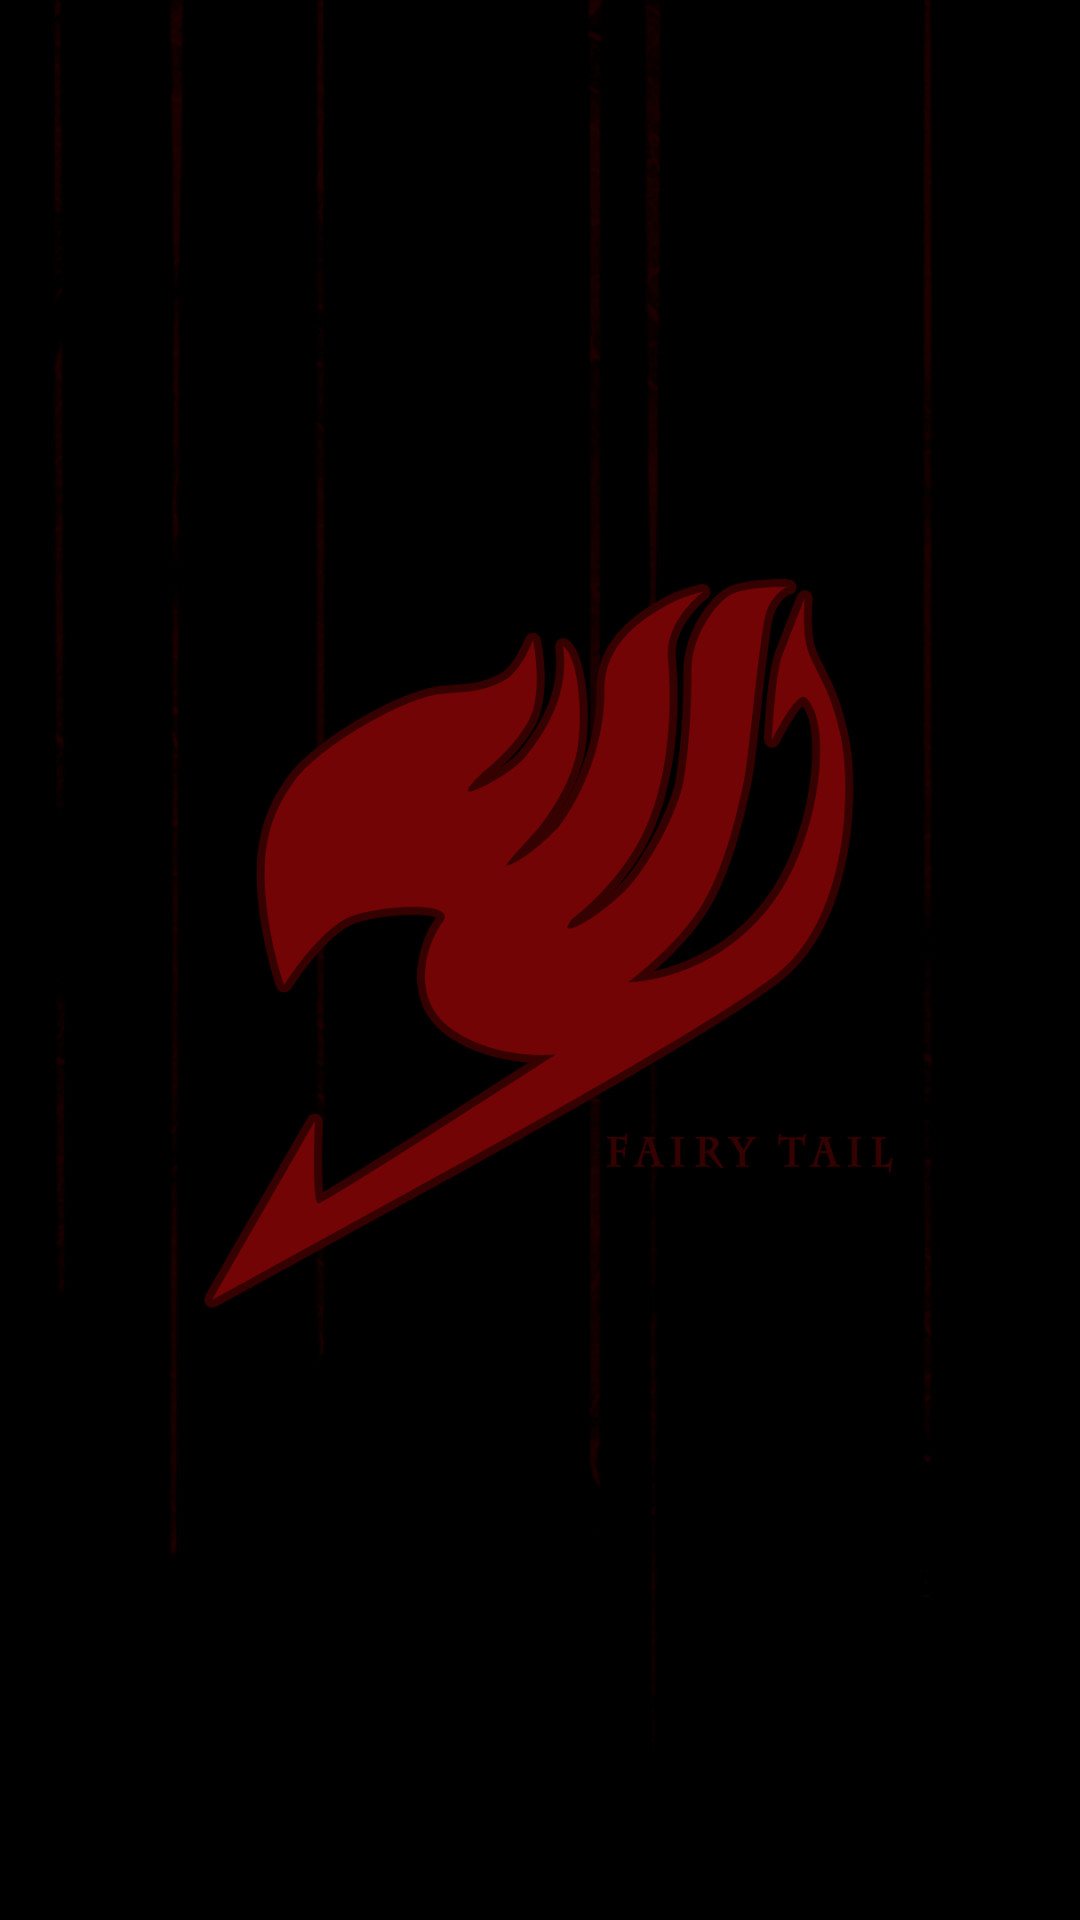 1080x1920 Fairy Tail Logo Wallpaper Full Hd On Wallpaper 1080p HD